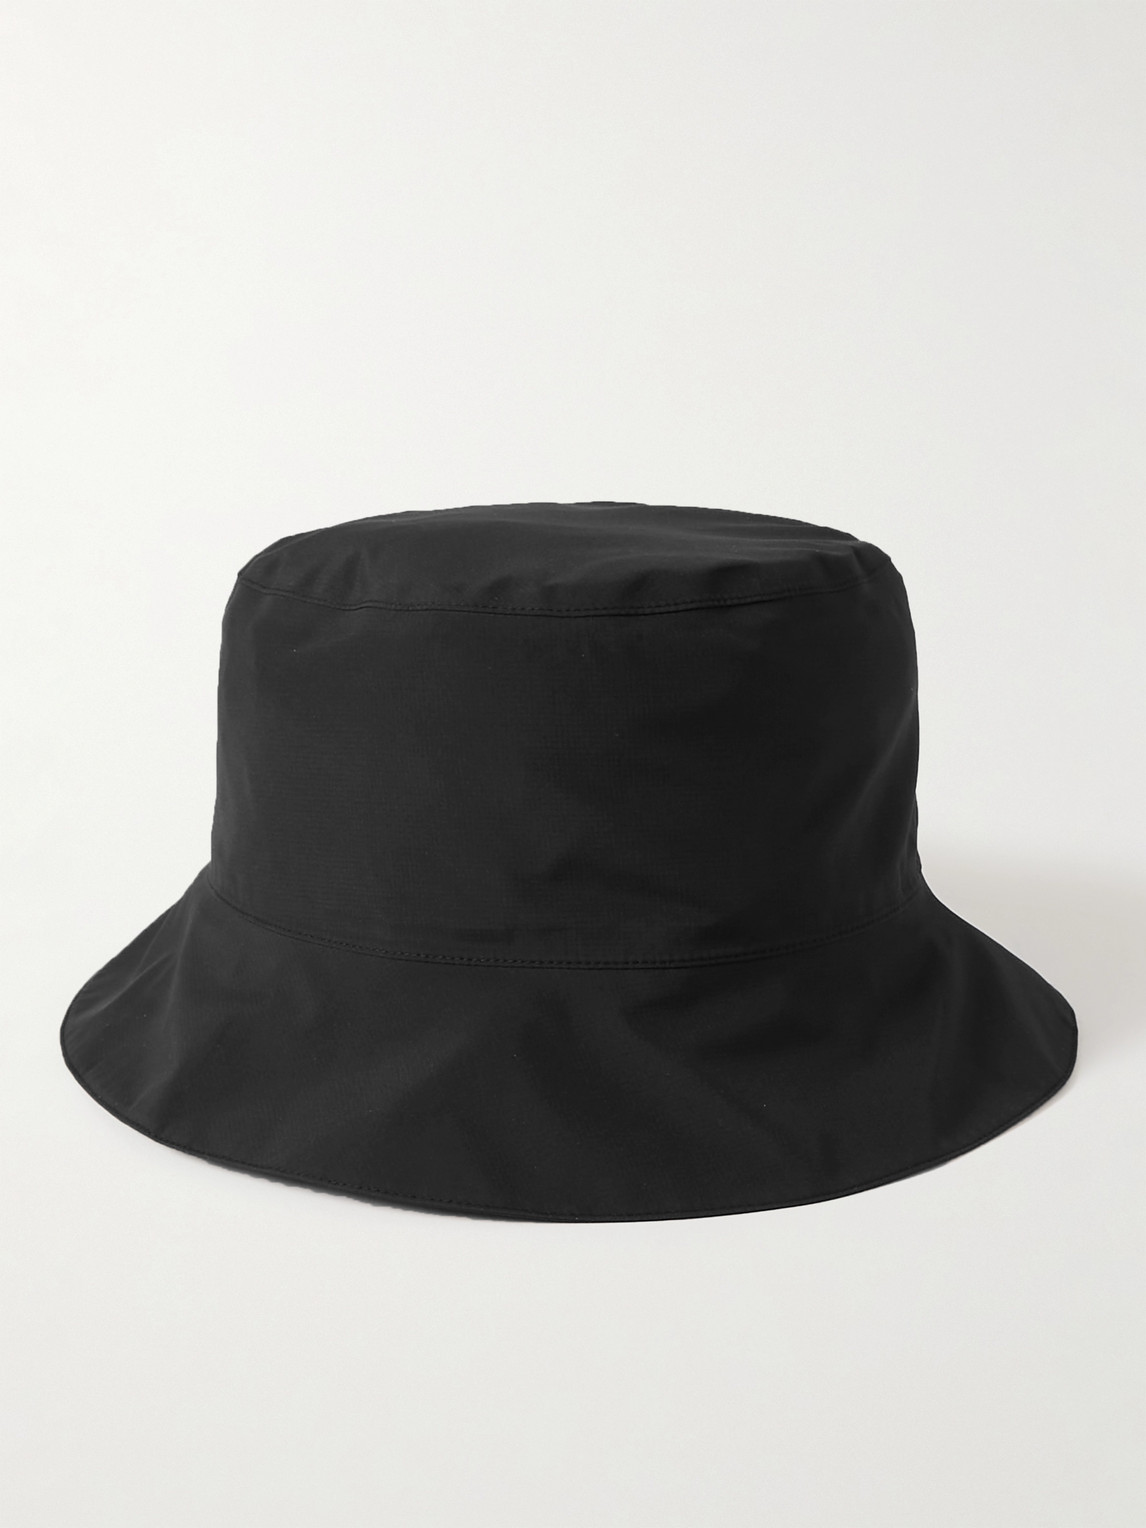 ACRONYM GORE-TEX SHELL BUCKET HAT